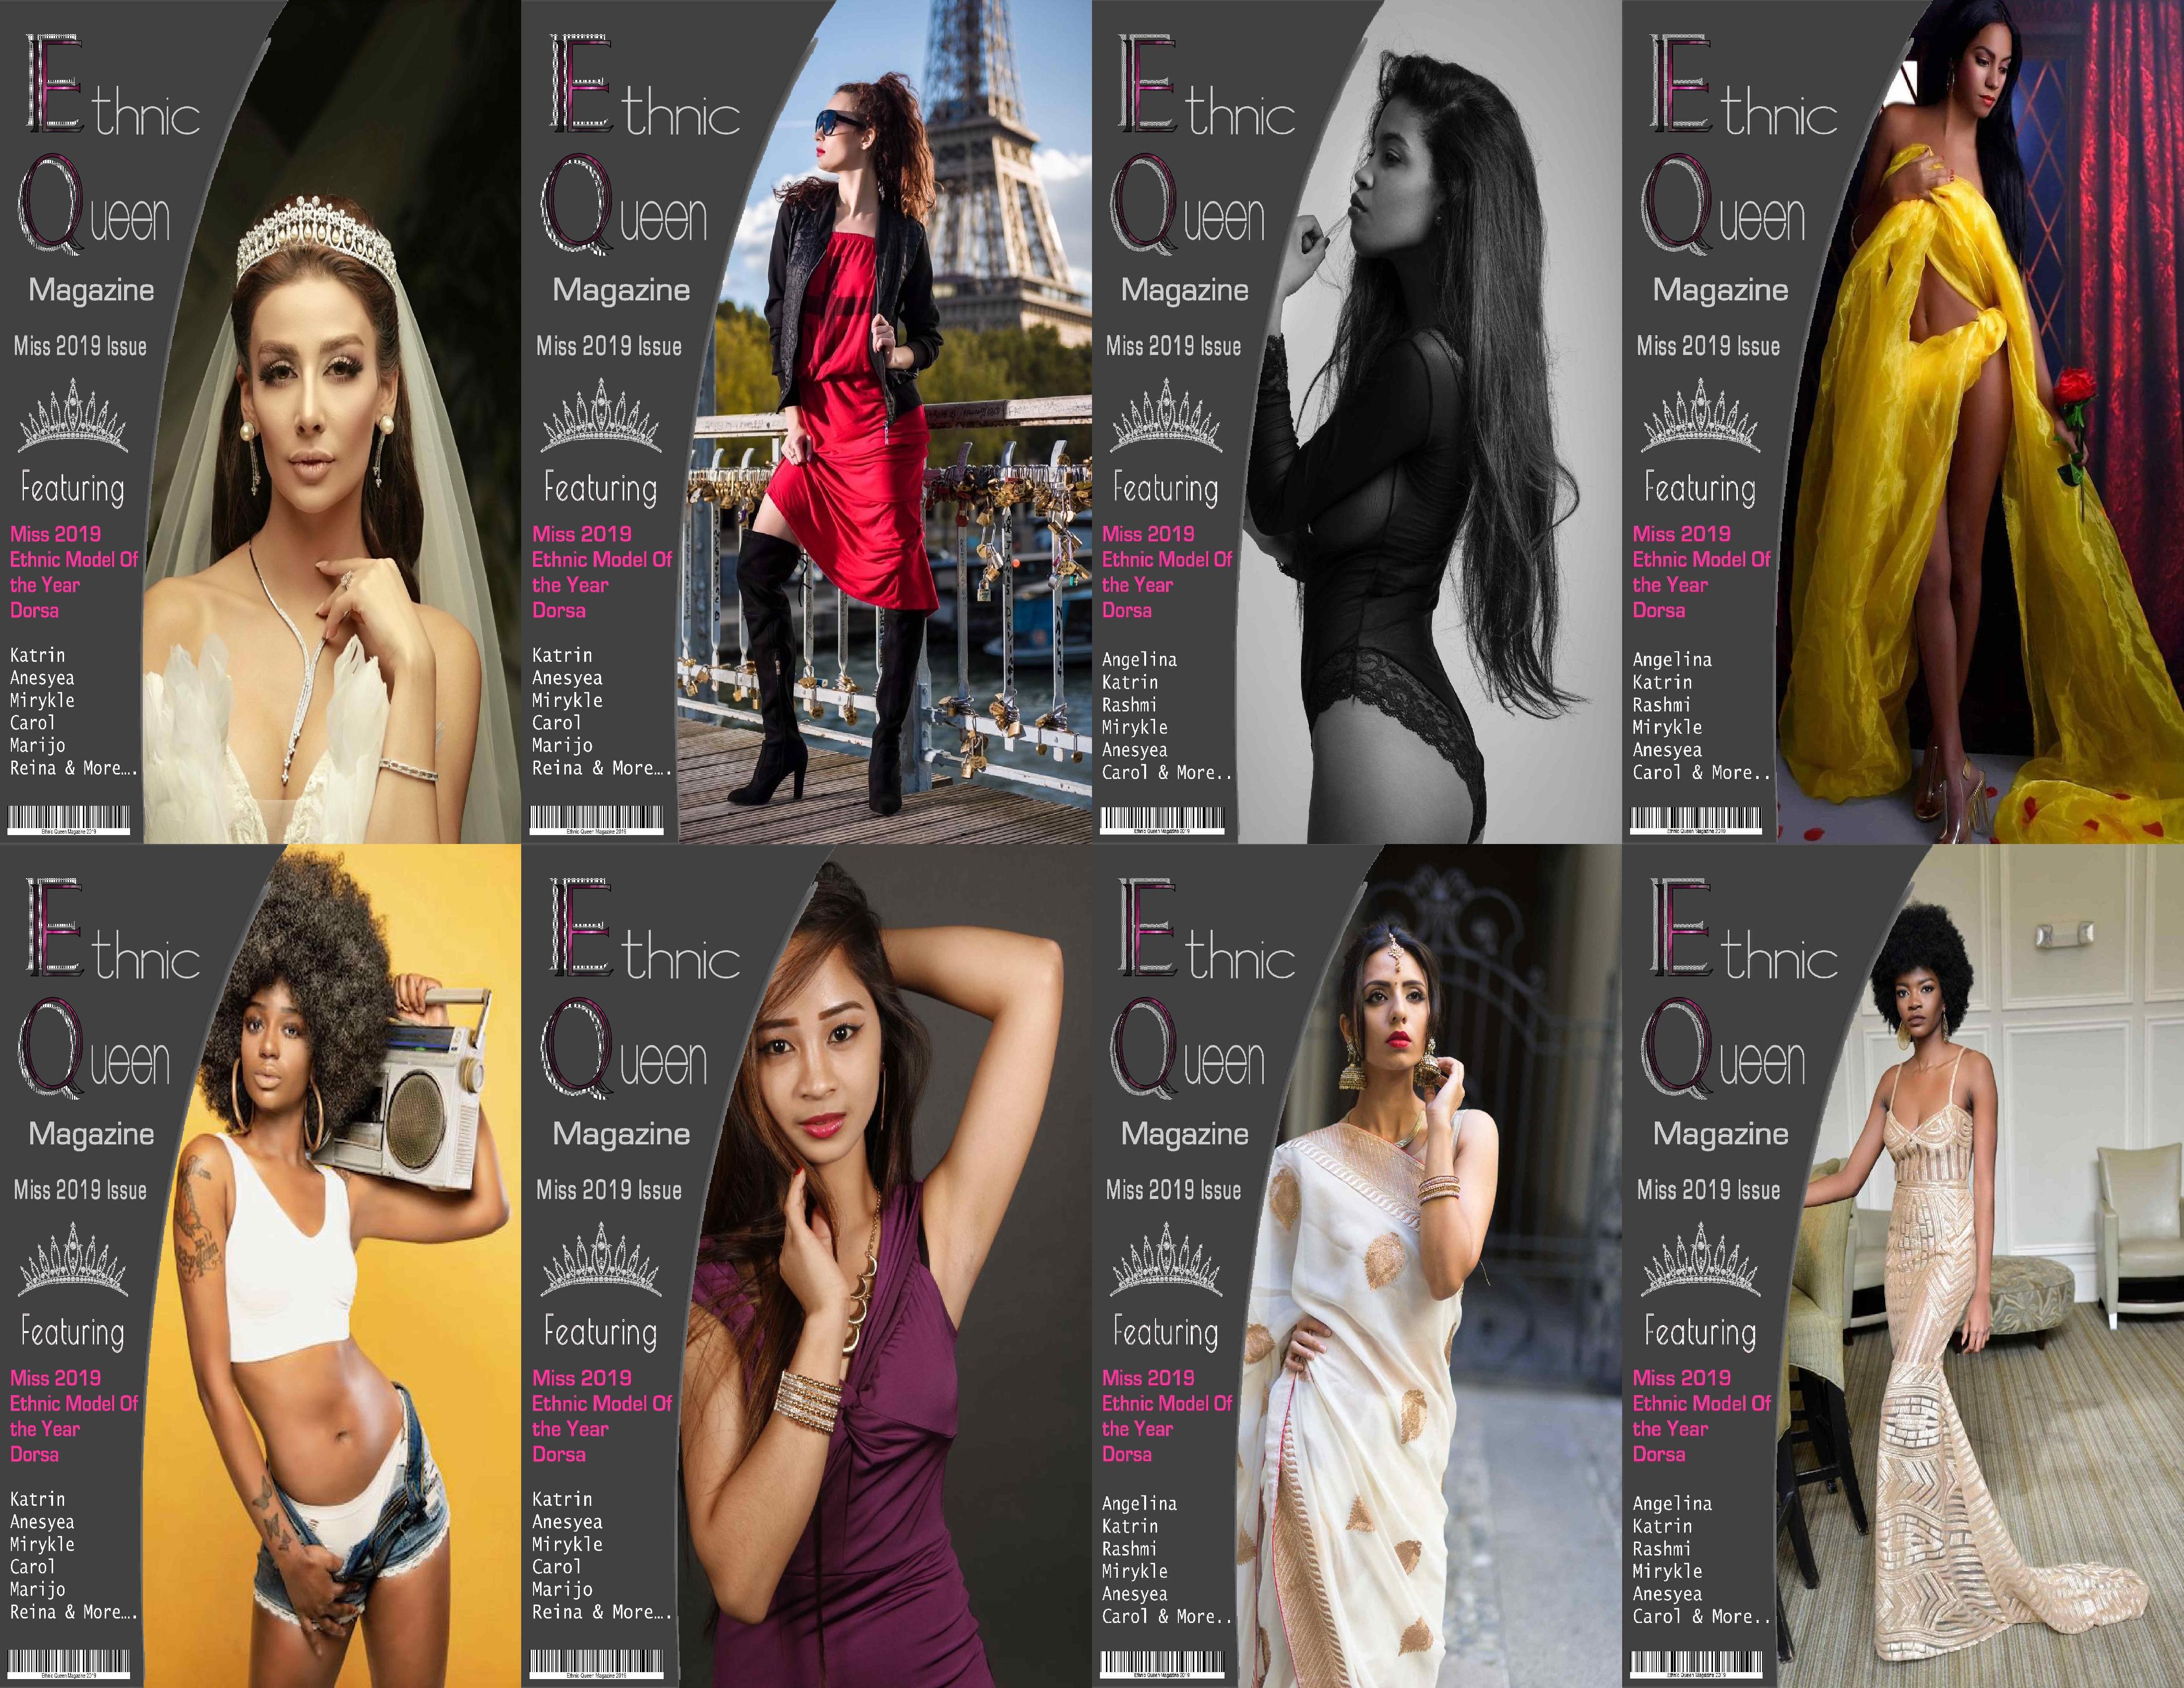 Miss 2020 Ethnic Queen Magazine Free Magazine Modeling Contest